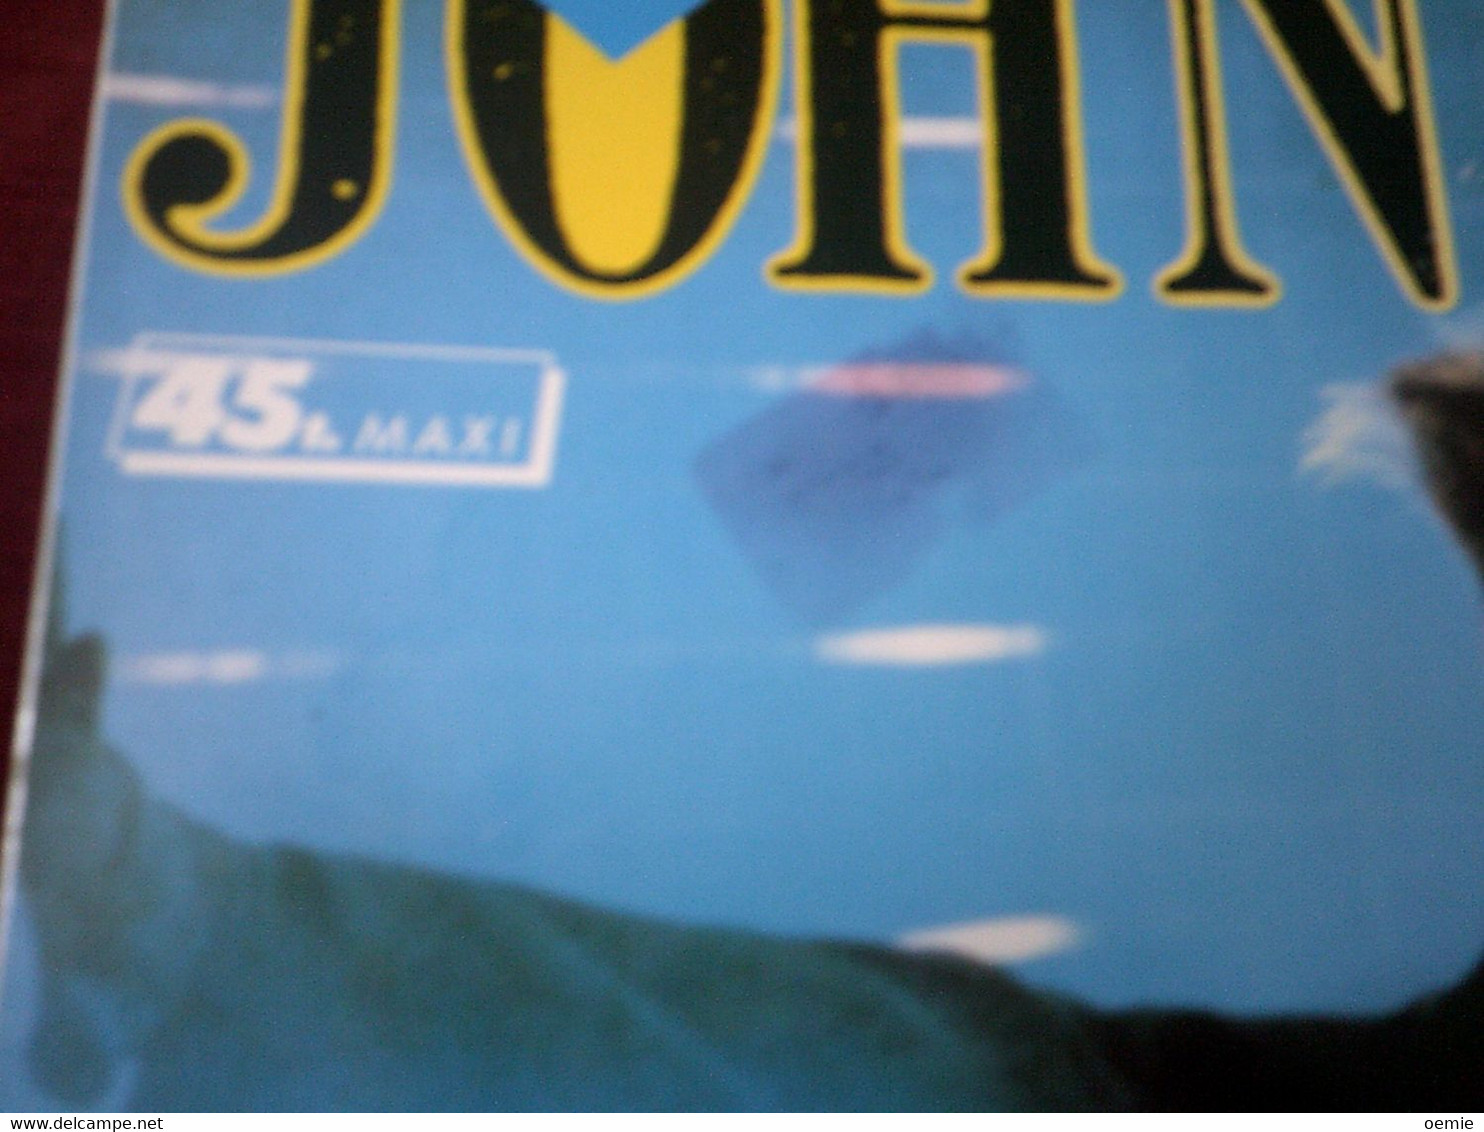 DESIRELESS  "  JOHN - 45 T - Maxi-Single